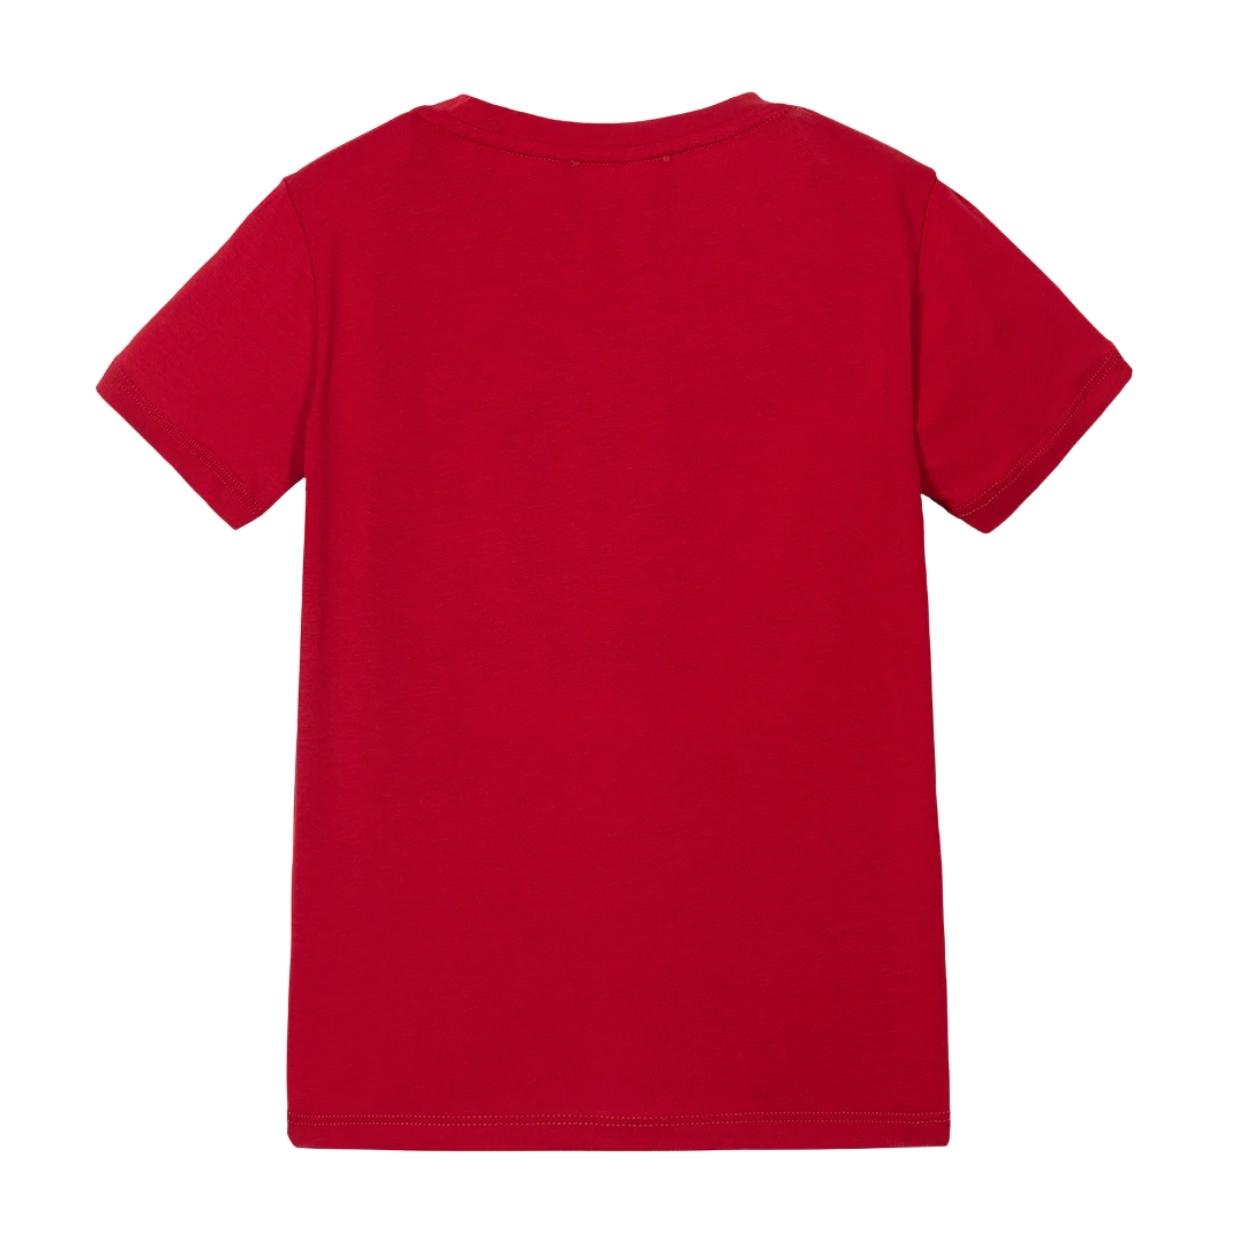 Emporio Armani Junior Red Eagle Print T-Shirt